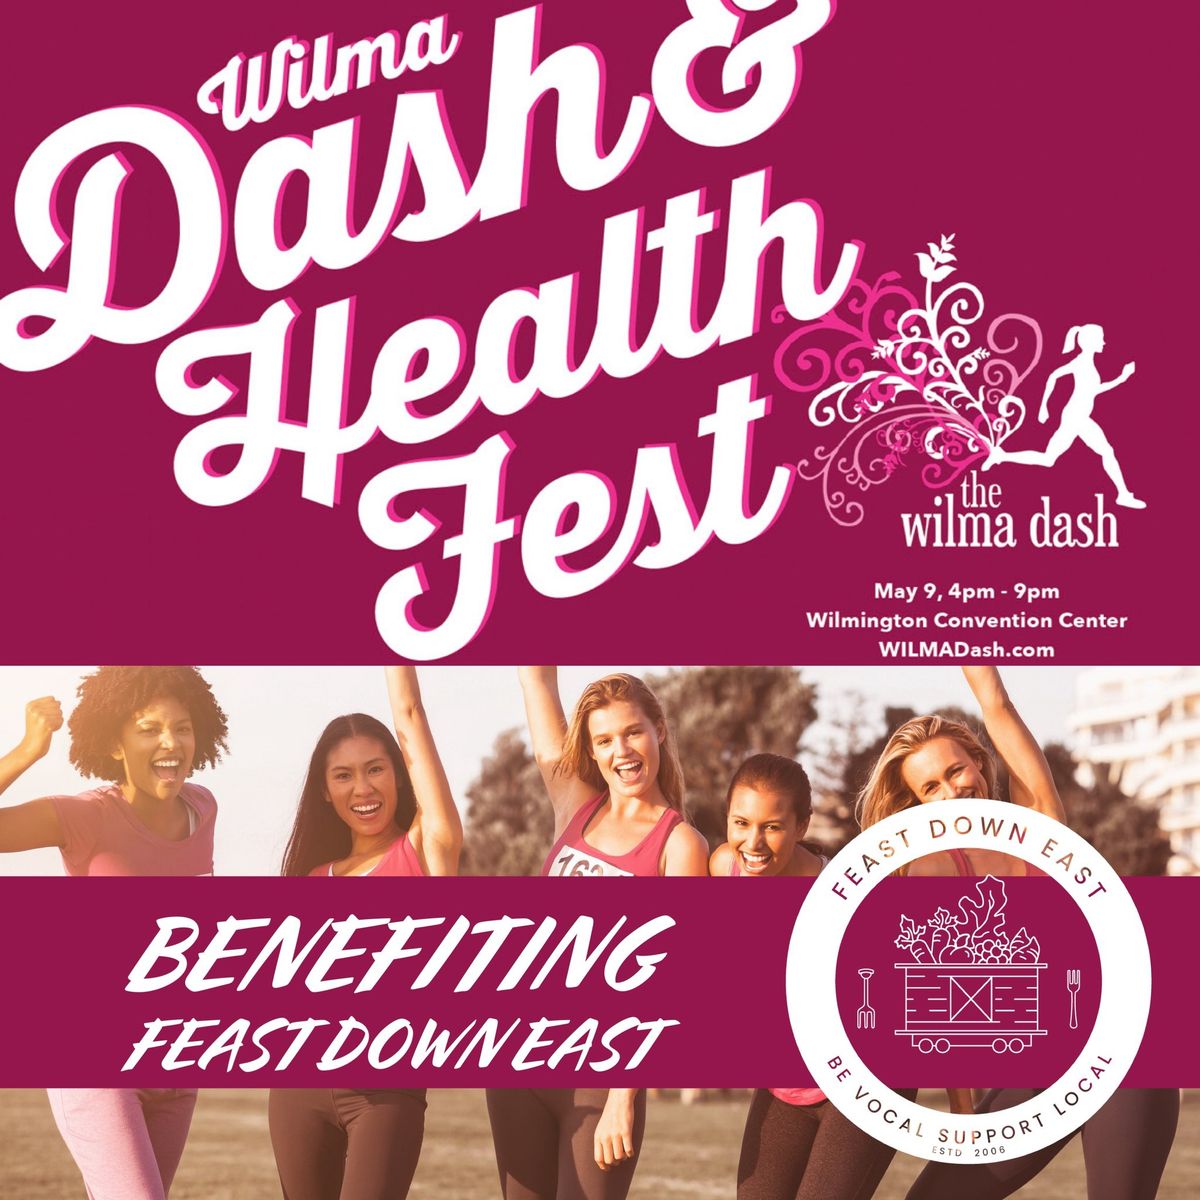 WILMA Dash & Health Fest Benefiting Feast Down East